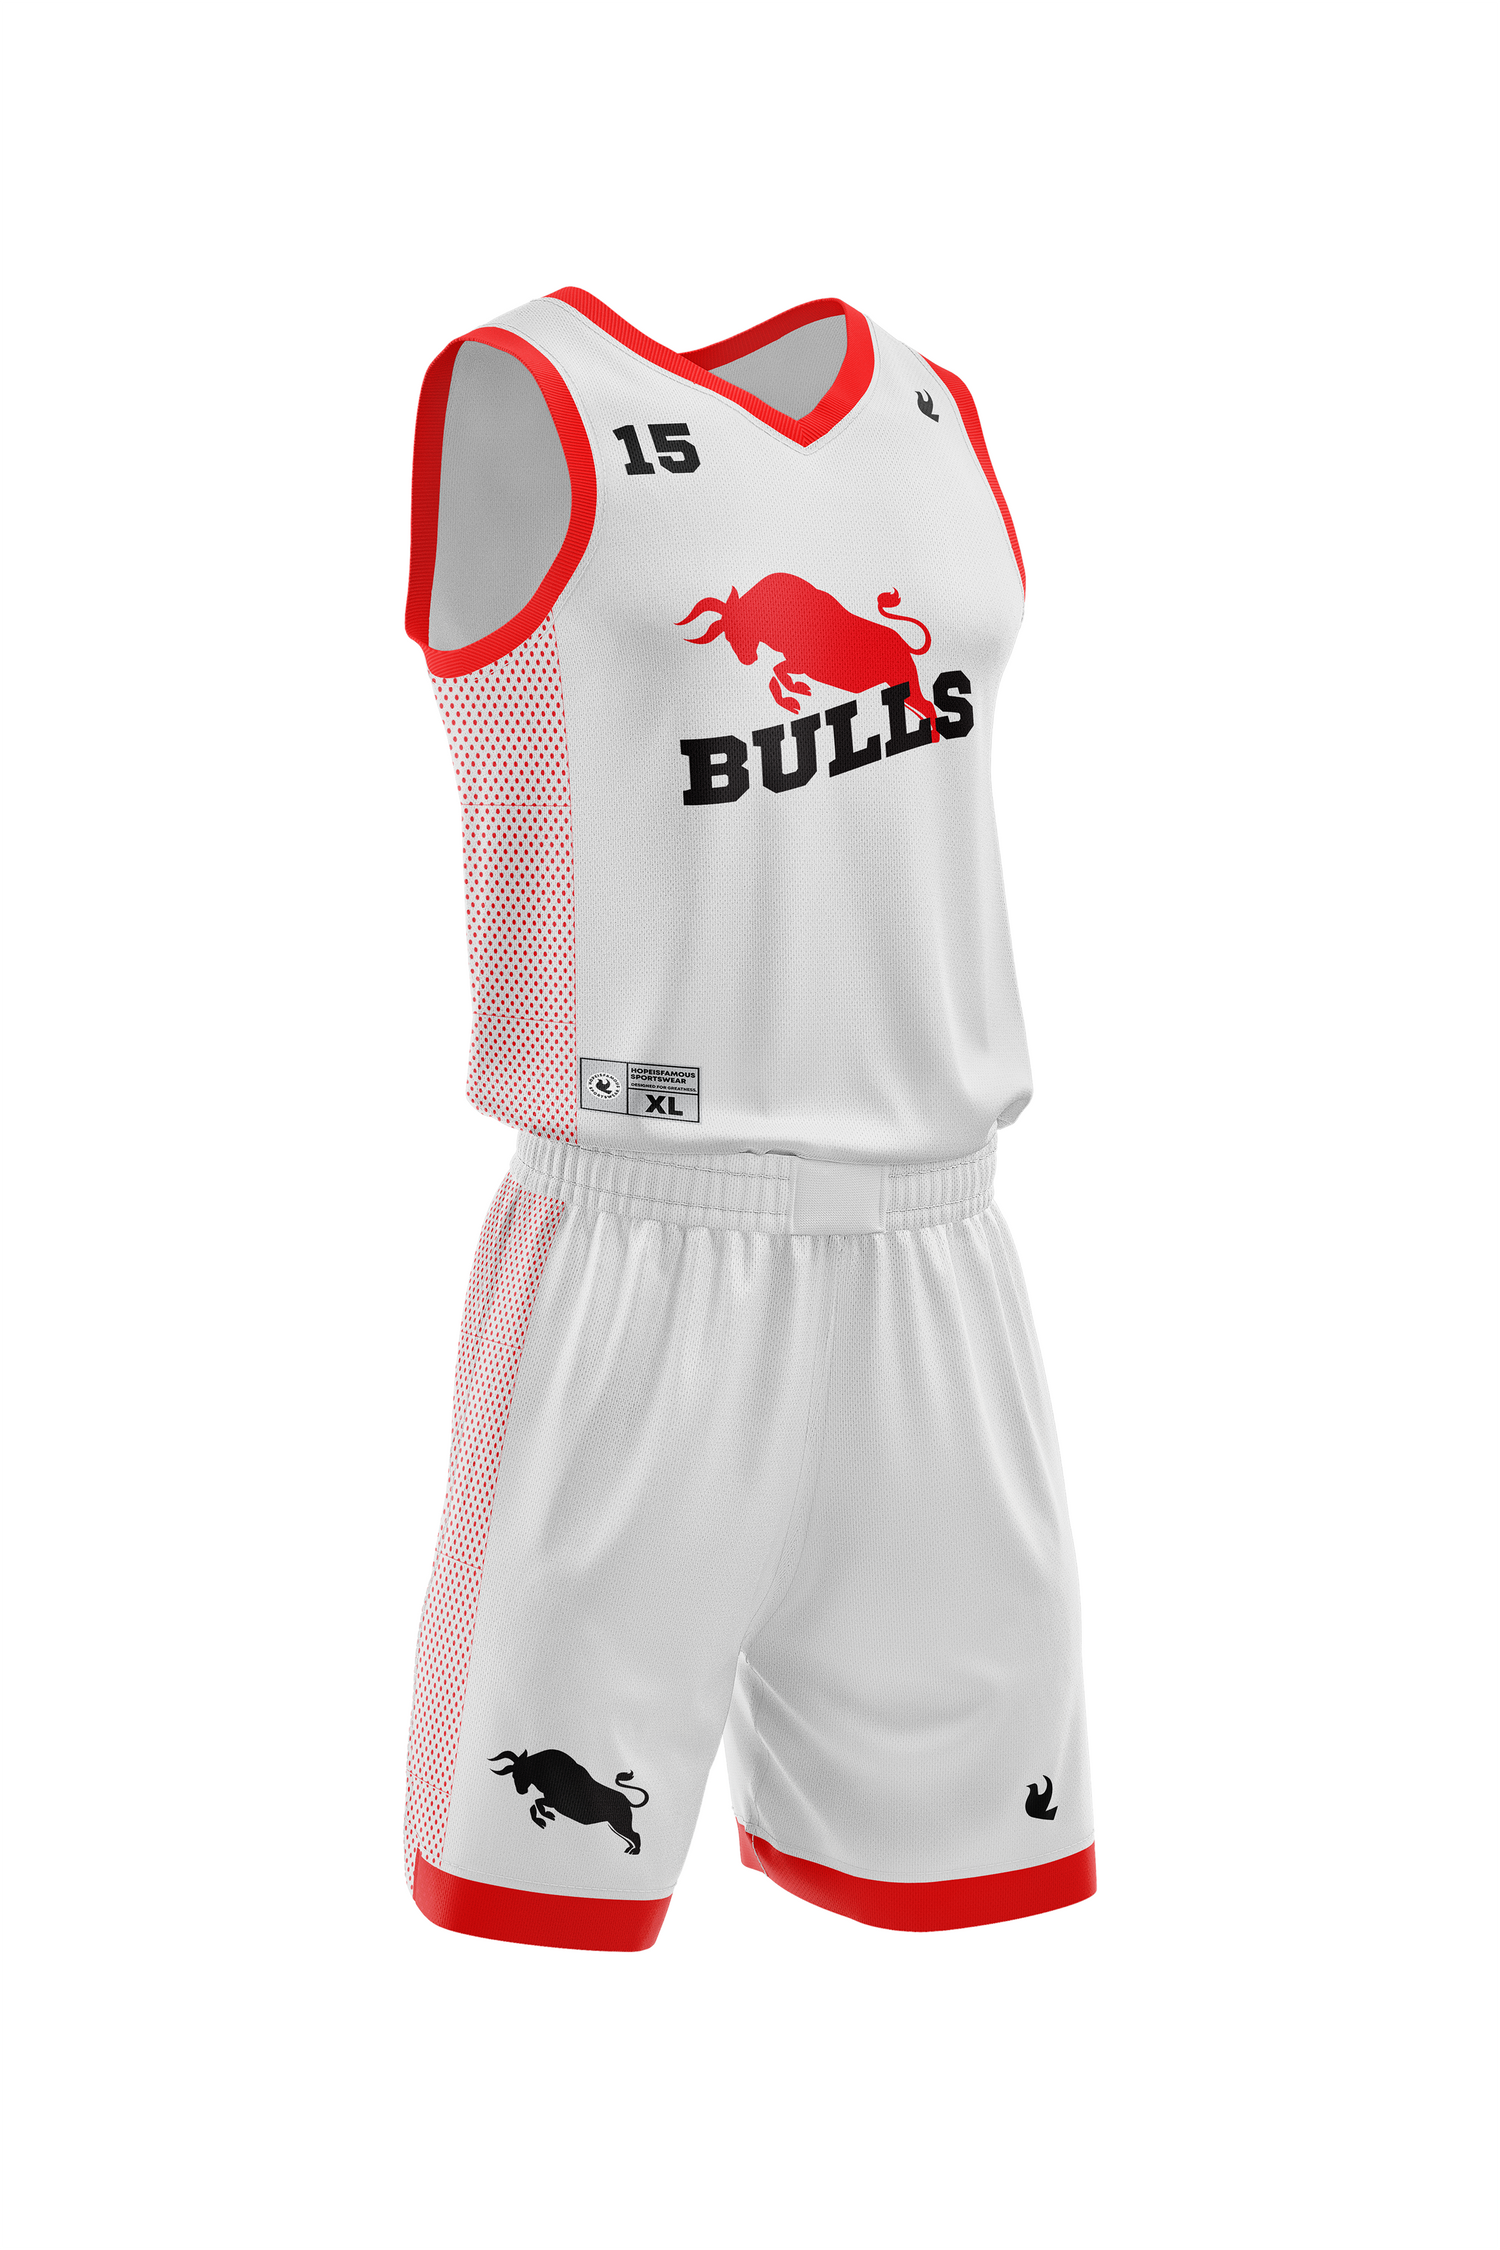 M-Power Basketball Uniform: Bulls